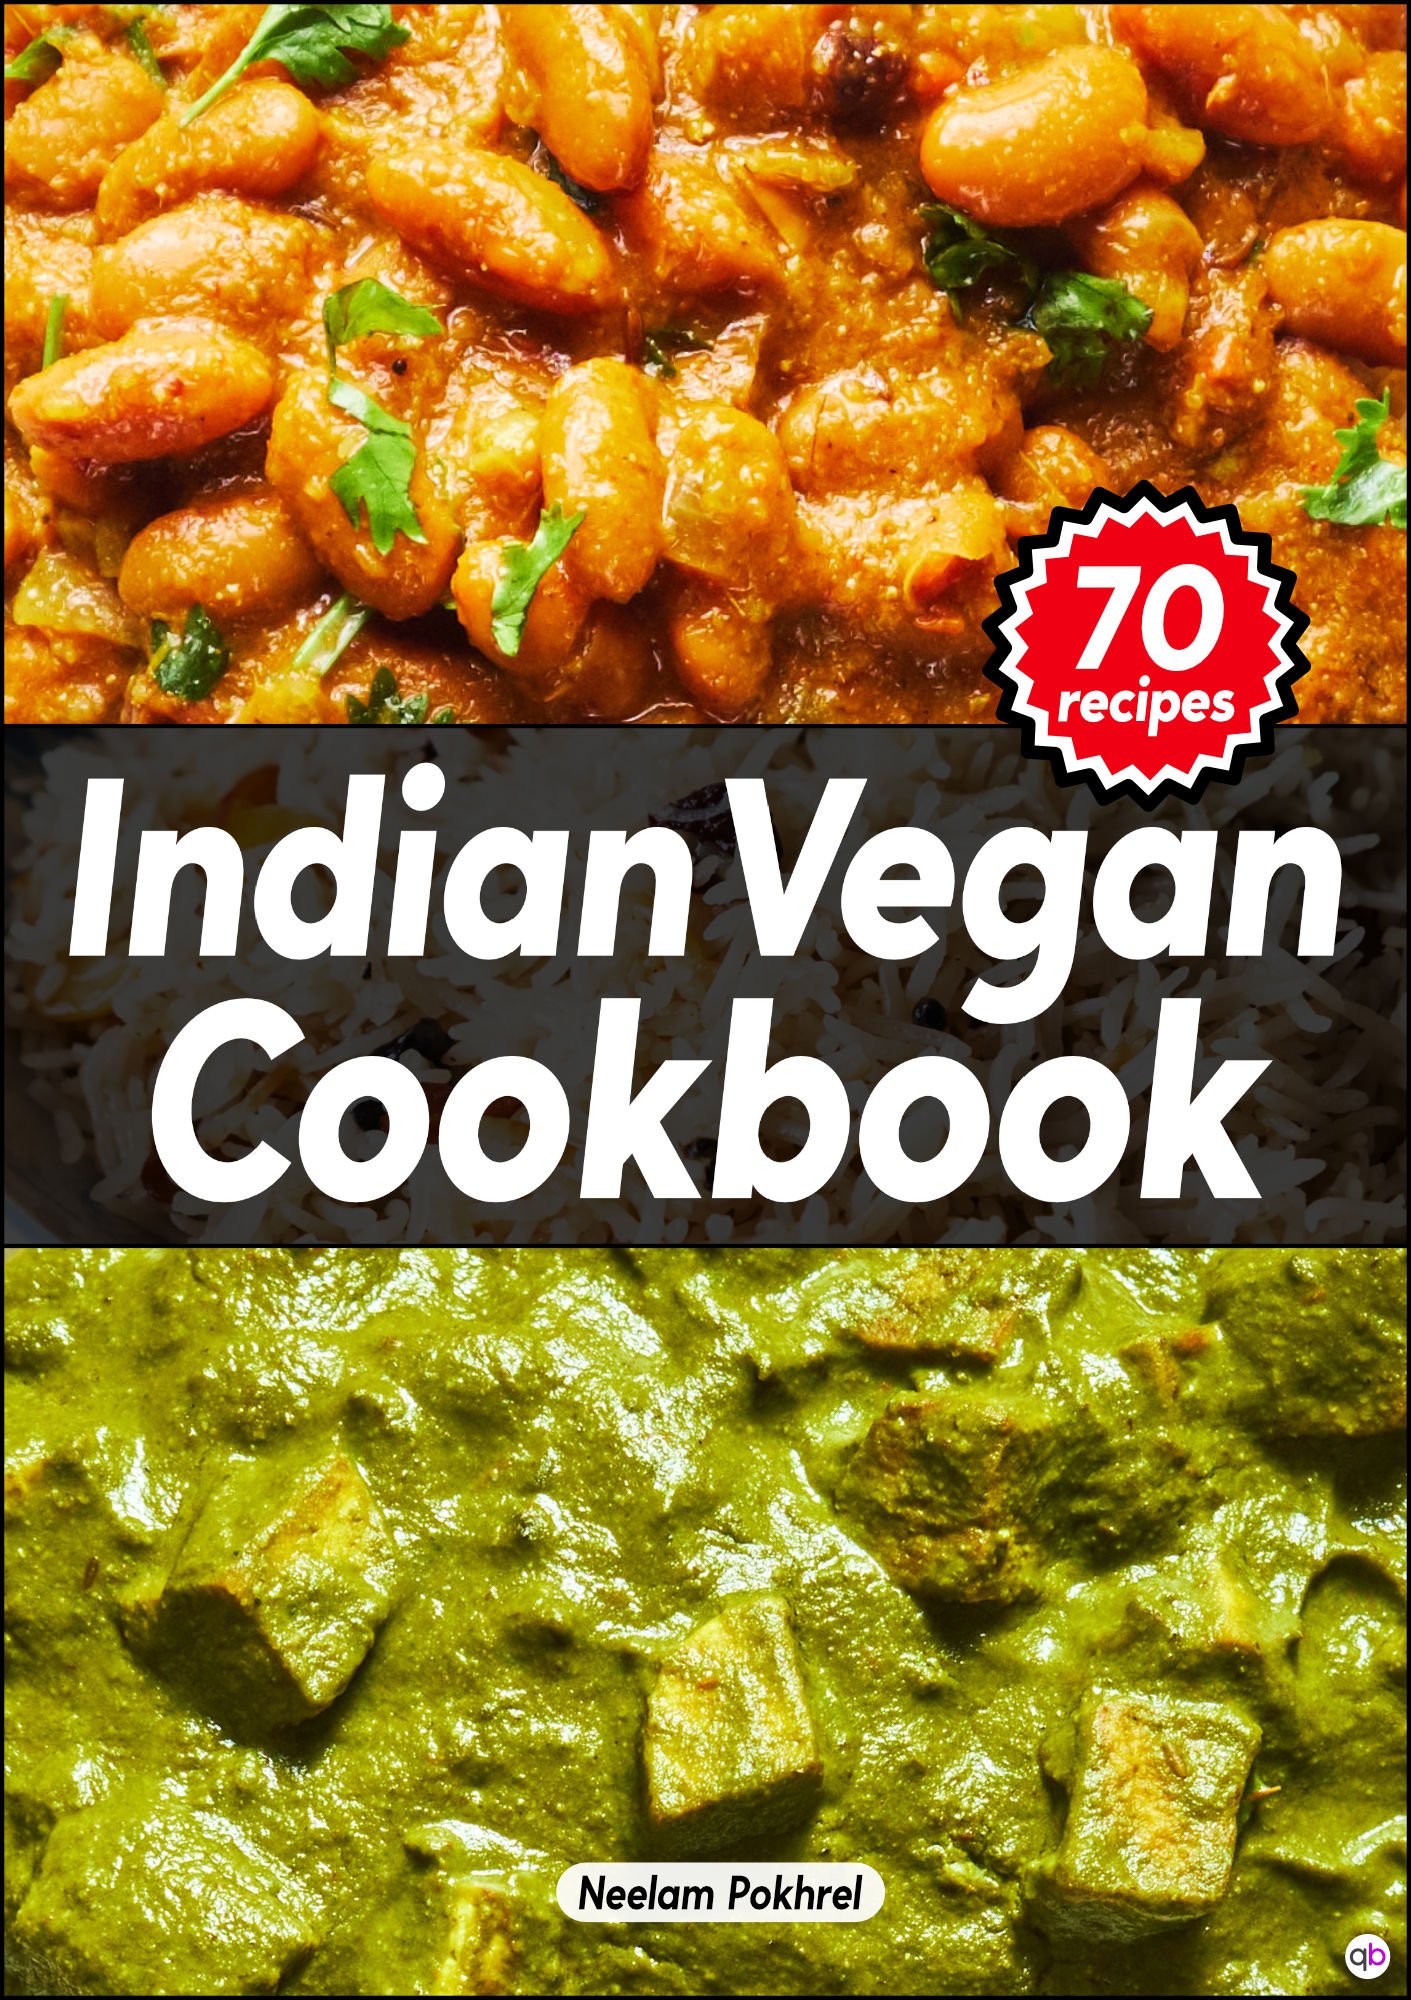 Veganbell's Indian Vegan Cookbook Product Feature Image